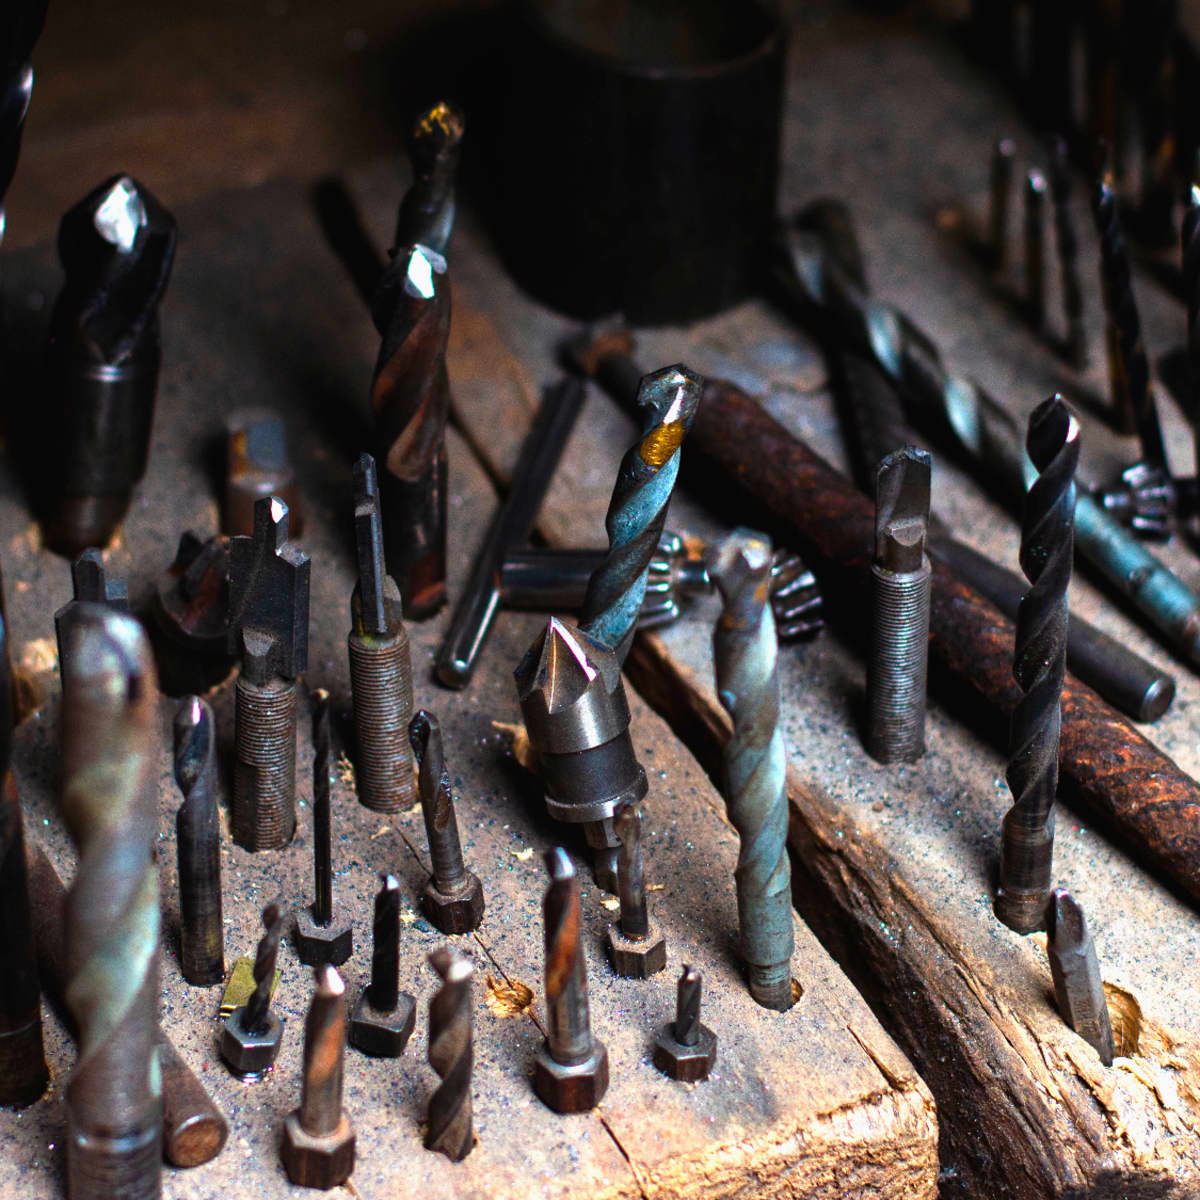 Progress is fine, but it's gone on for too long.: Clutch-head screwdrivers